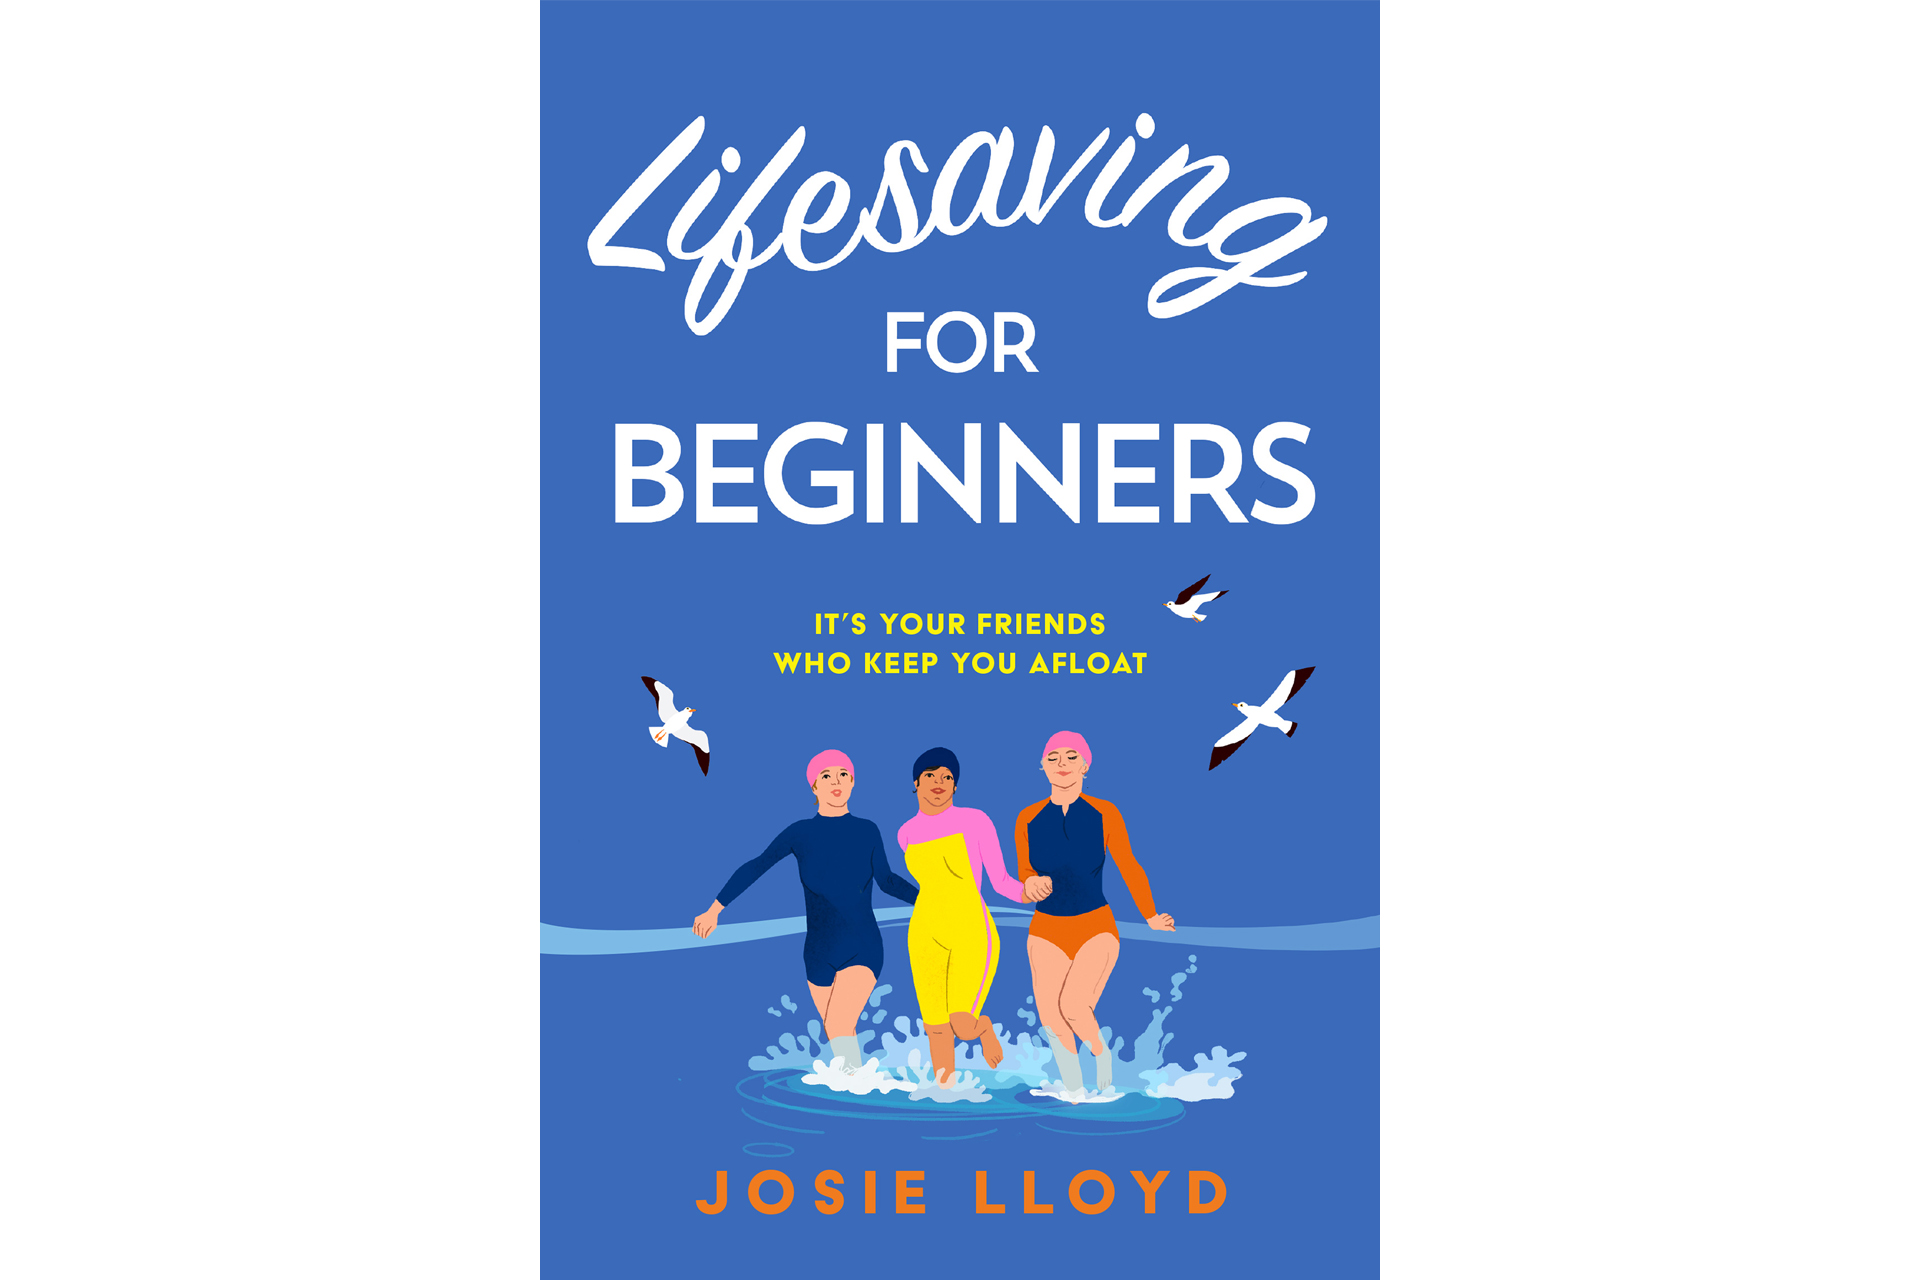 Josie Lloyd lifesaving for beginners